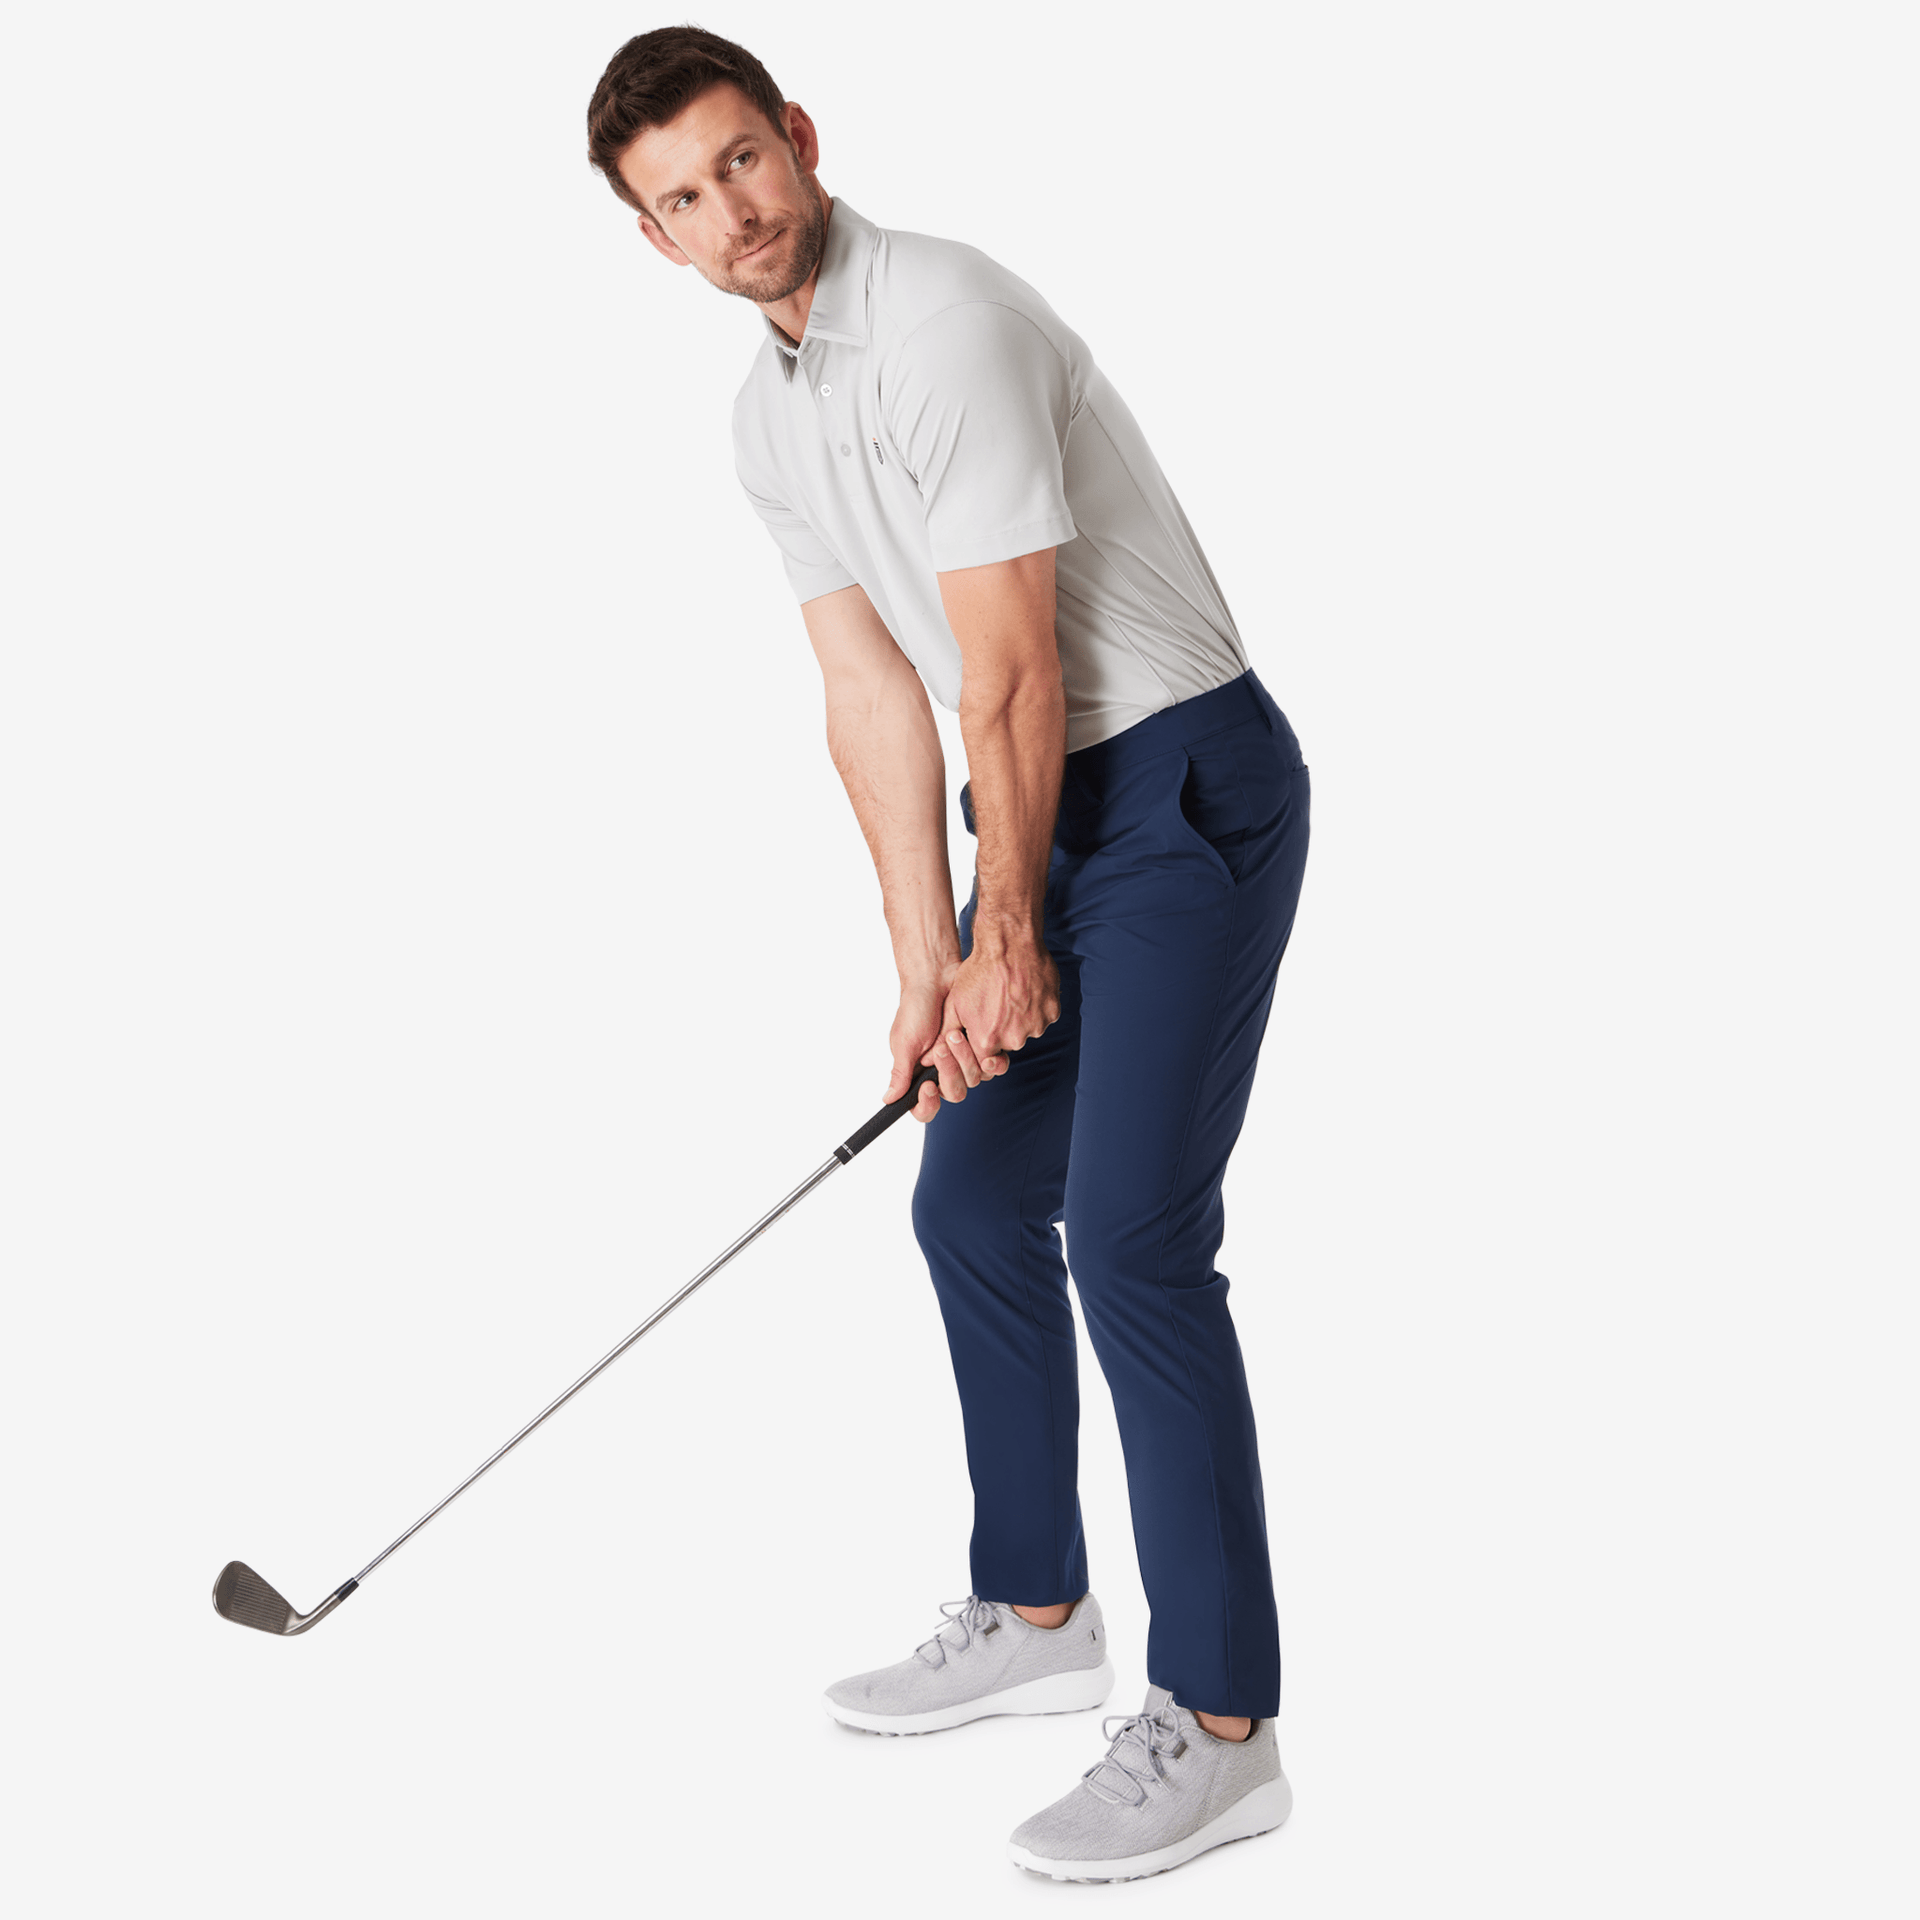 Men's Golf Pants Size 30x32 All in Motion Dark Gray Moisture